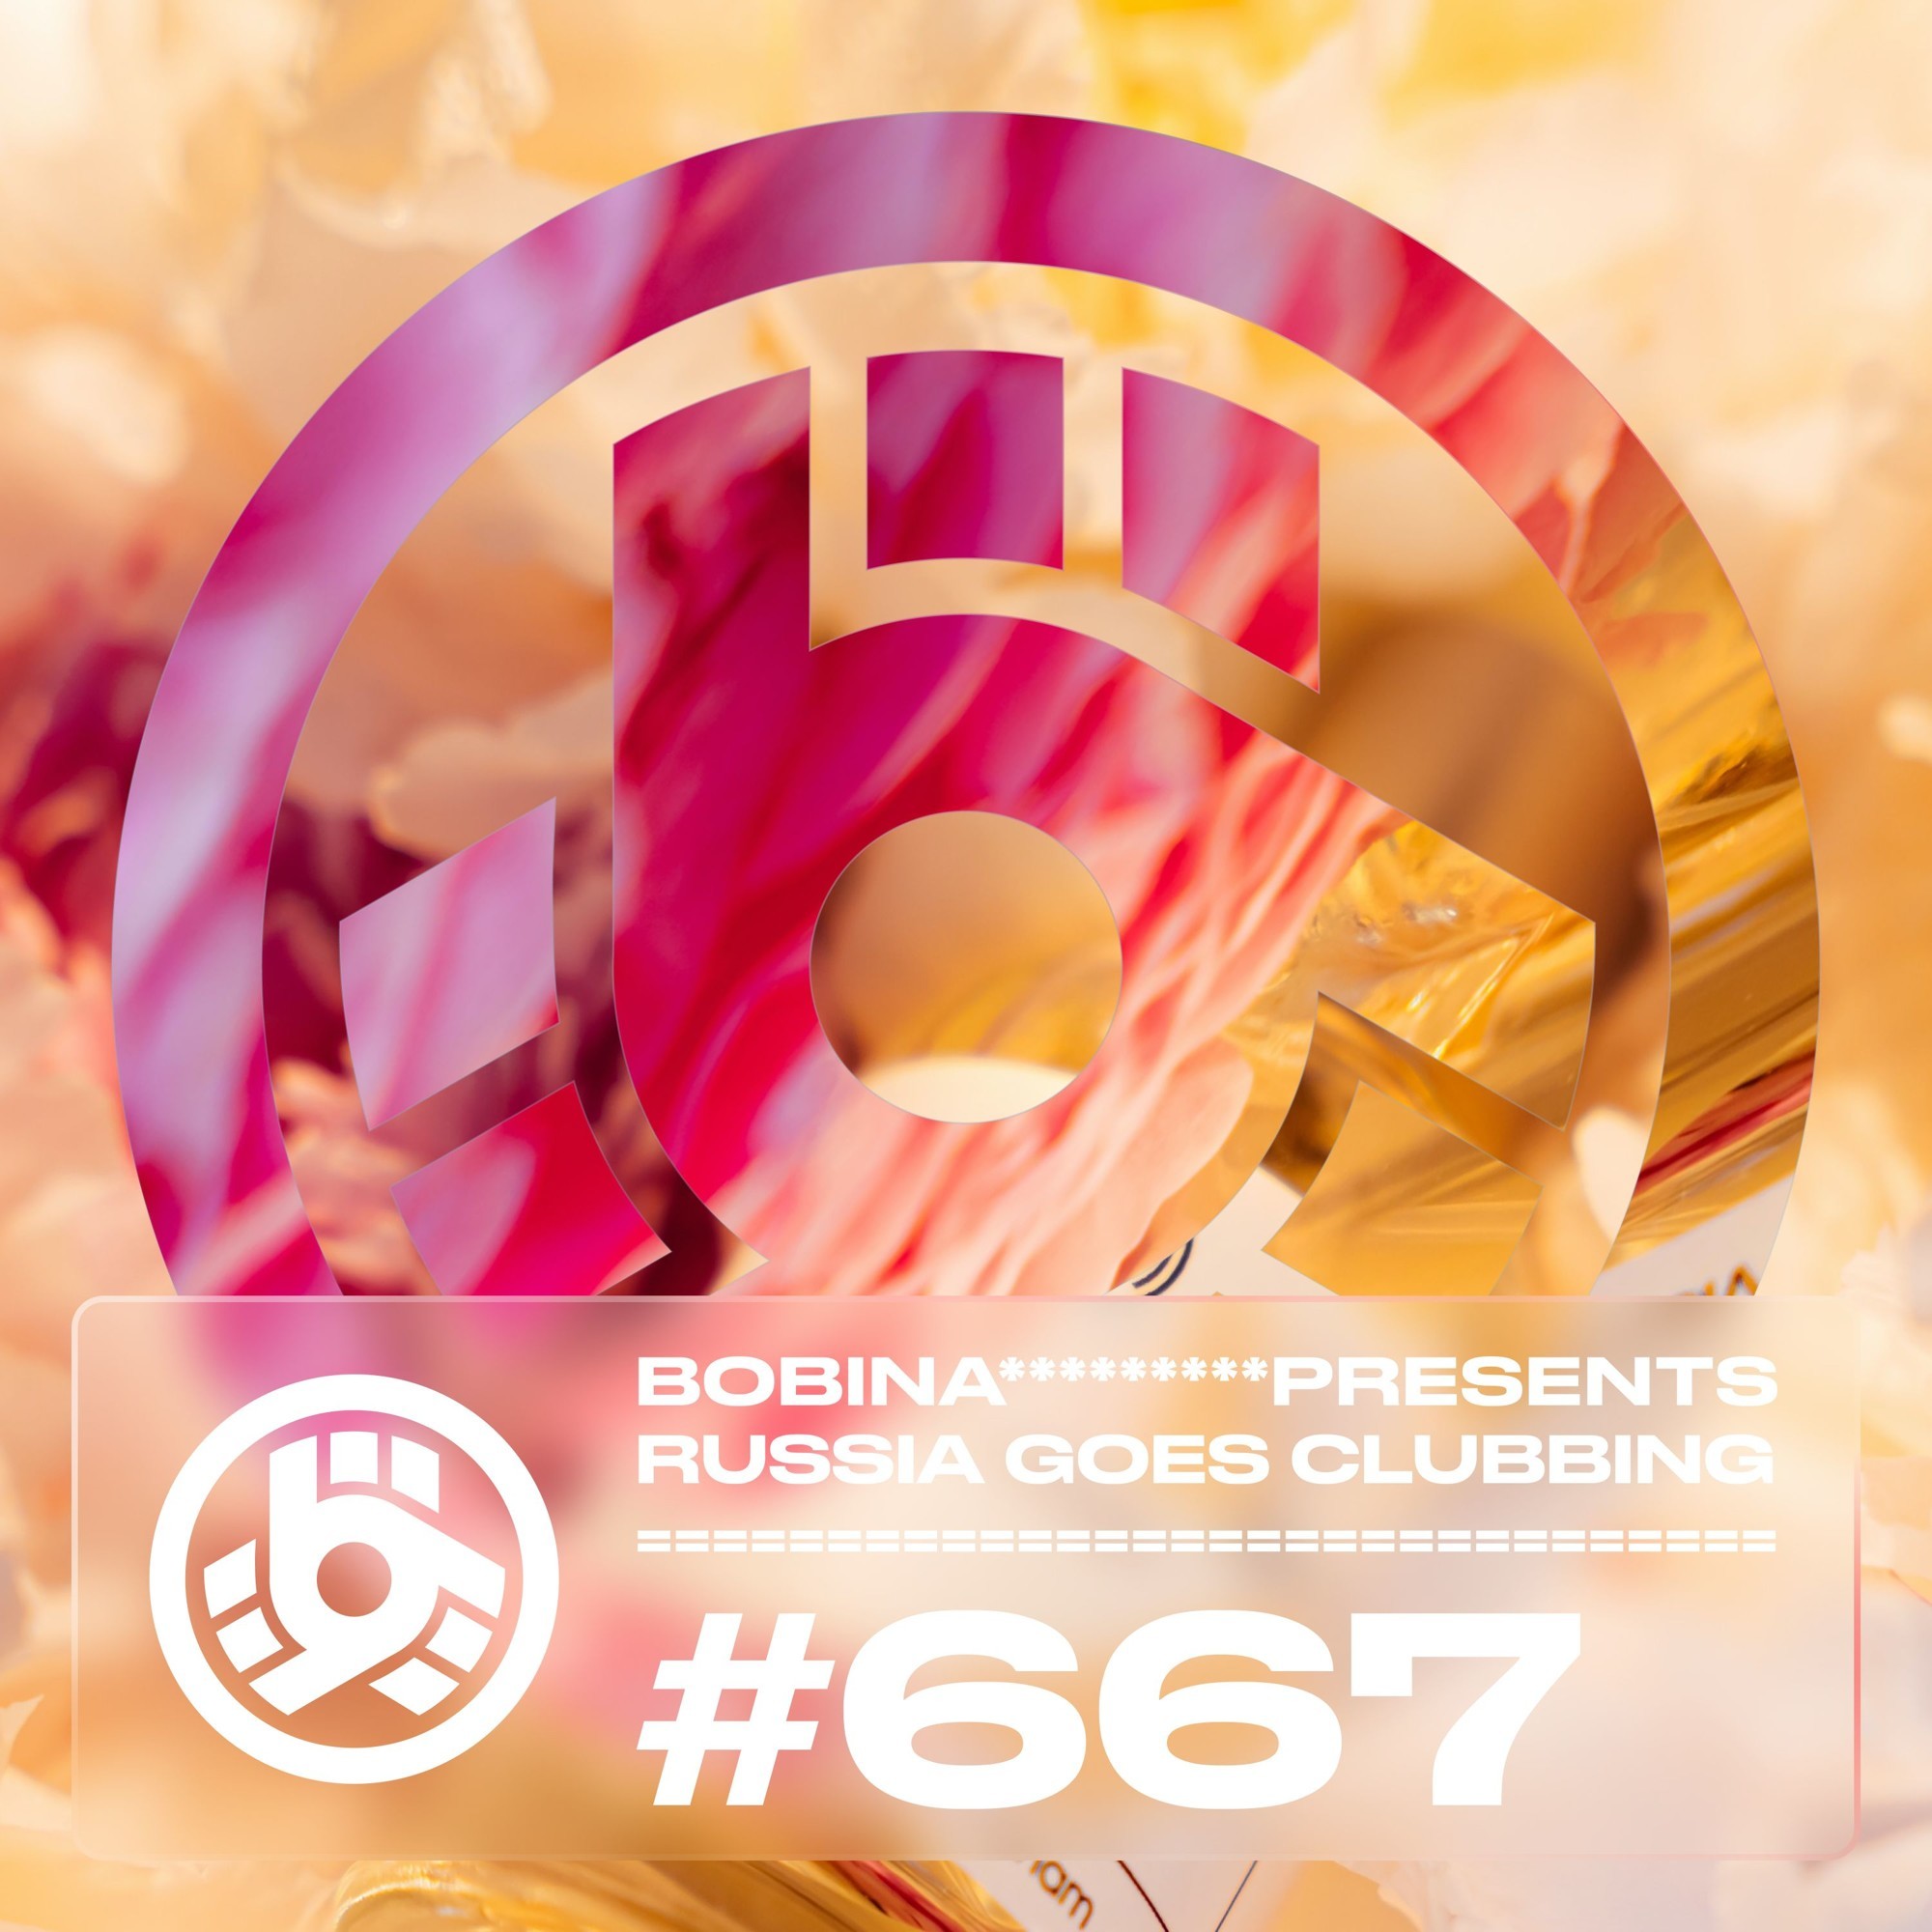 Bobina - Russia goes Clubbing. Bobina Russia goes Clubbing CD. Bobina - Russia goes Clubbing 727 (23-09-2022). Bobina - el bimbo (Extended Mix).